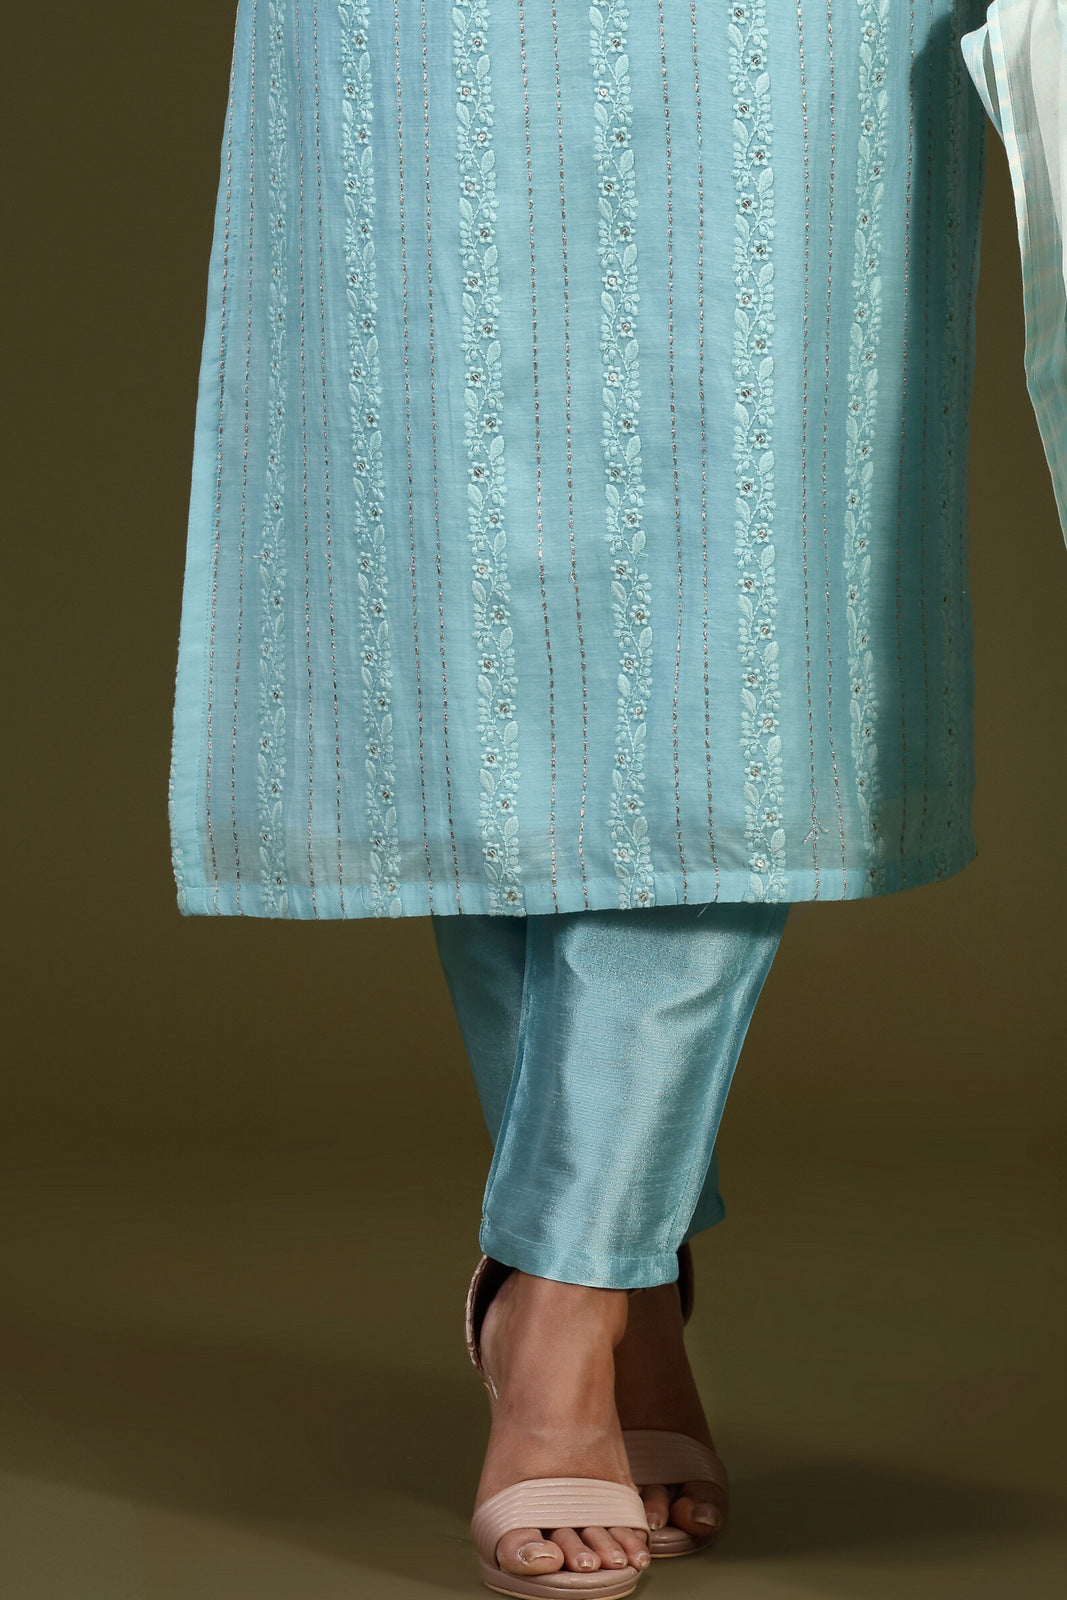 Sky Blue Embroidery and Zari work Straight Cut Salwar Suit